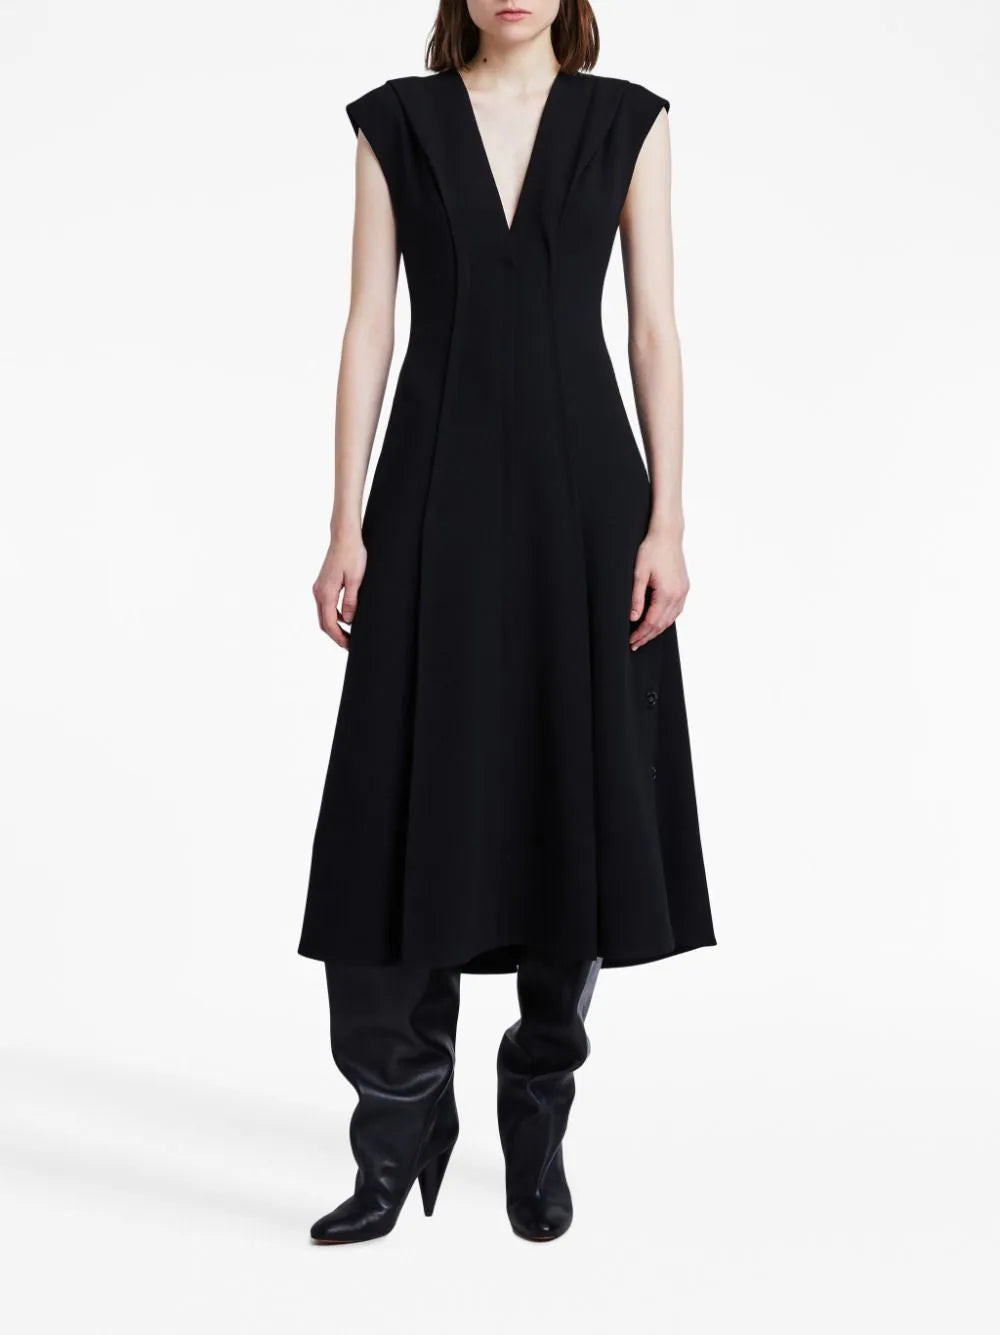 Matte Viscose Crepe Dress, black